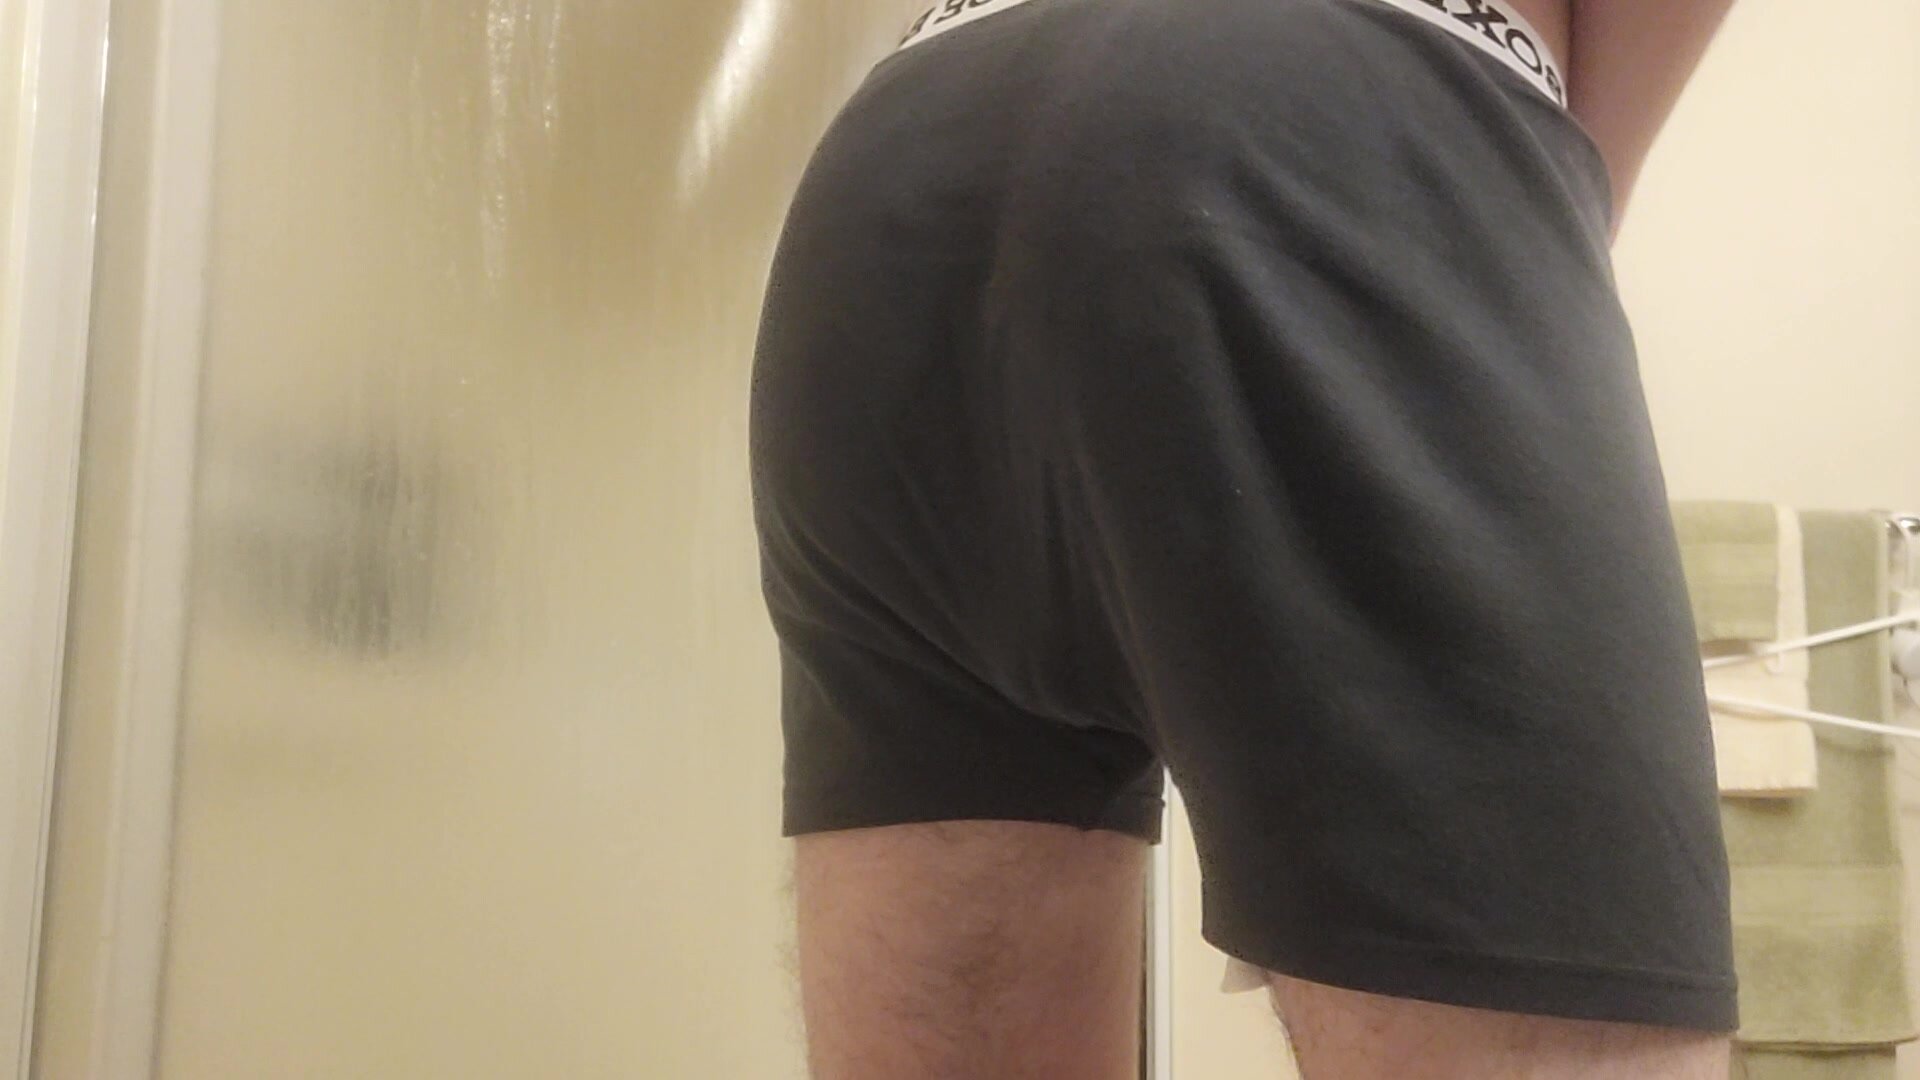 Panty poop accident - video 10